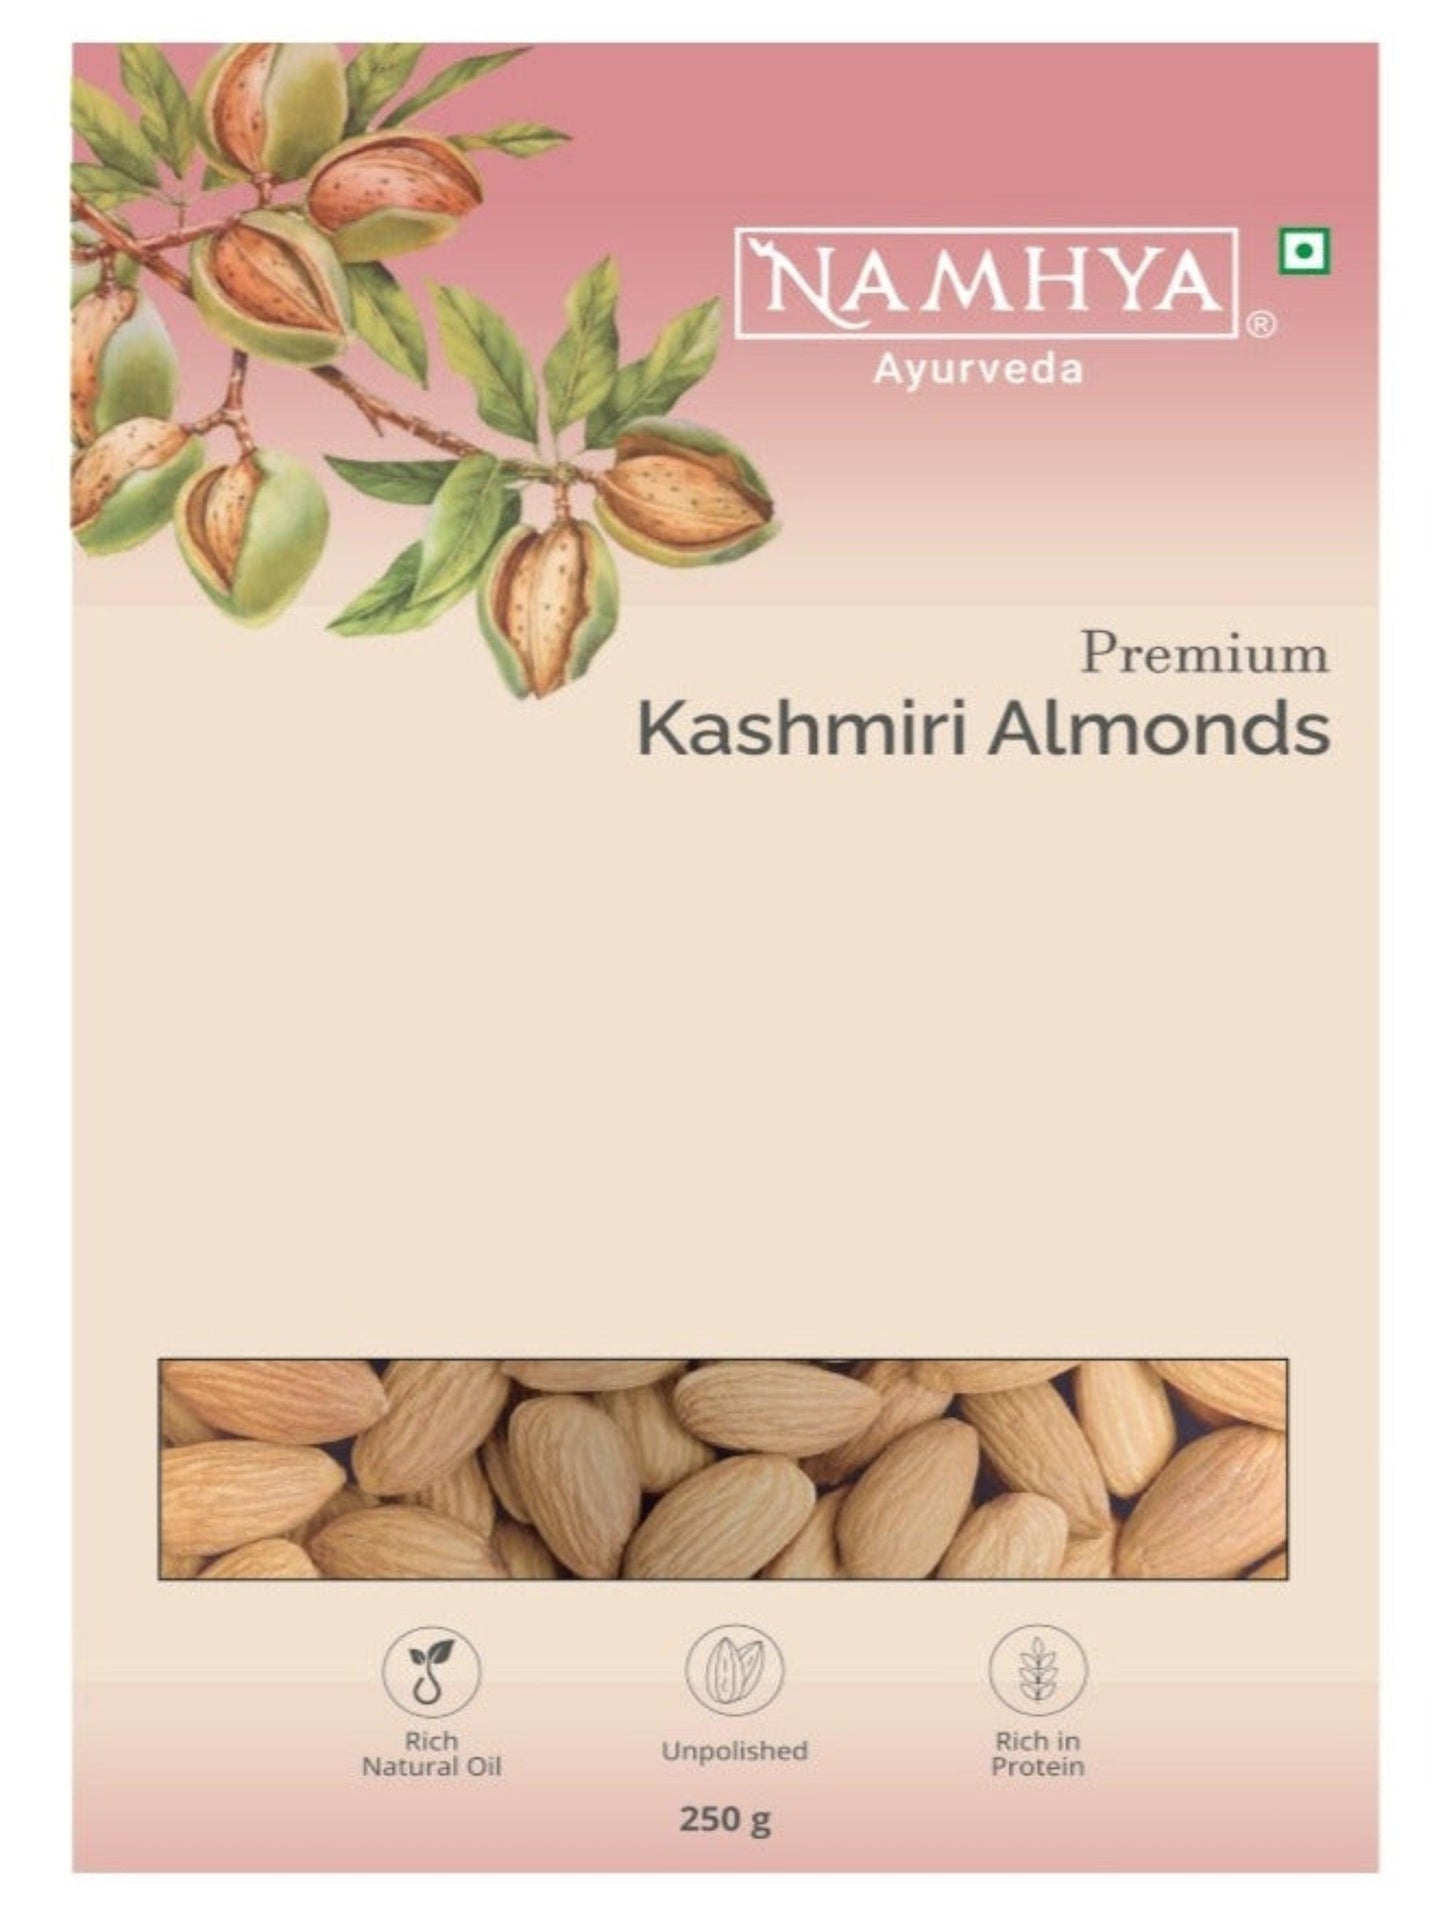 Namhya Premium Kashmiri Almond Kernels- Rich in Nutrients and Omega 3 Fatty Acids (200g)